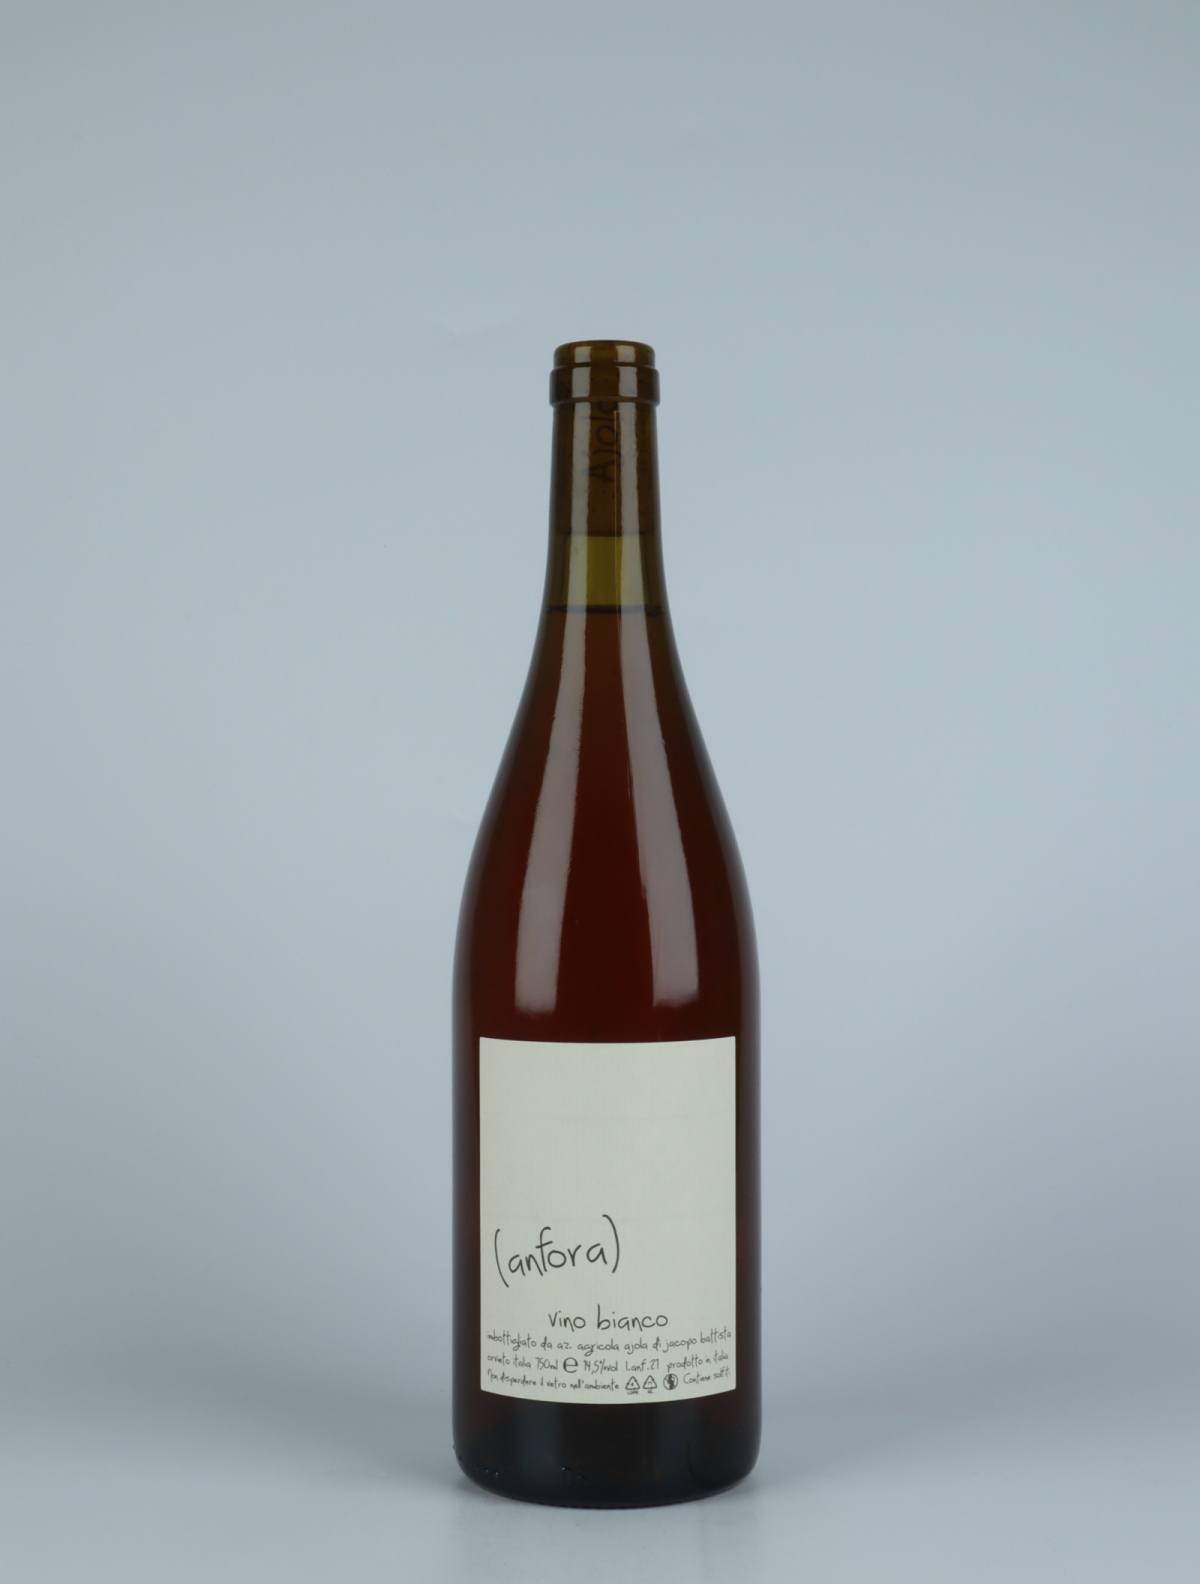 A bottle 2021 Vino Bianco Anfora Orange wine from Ajola, Umbria in Italy